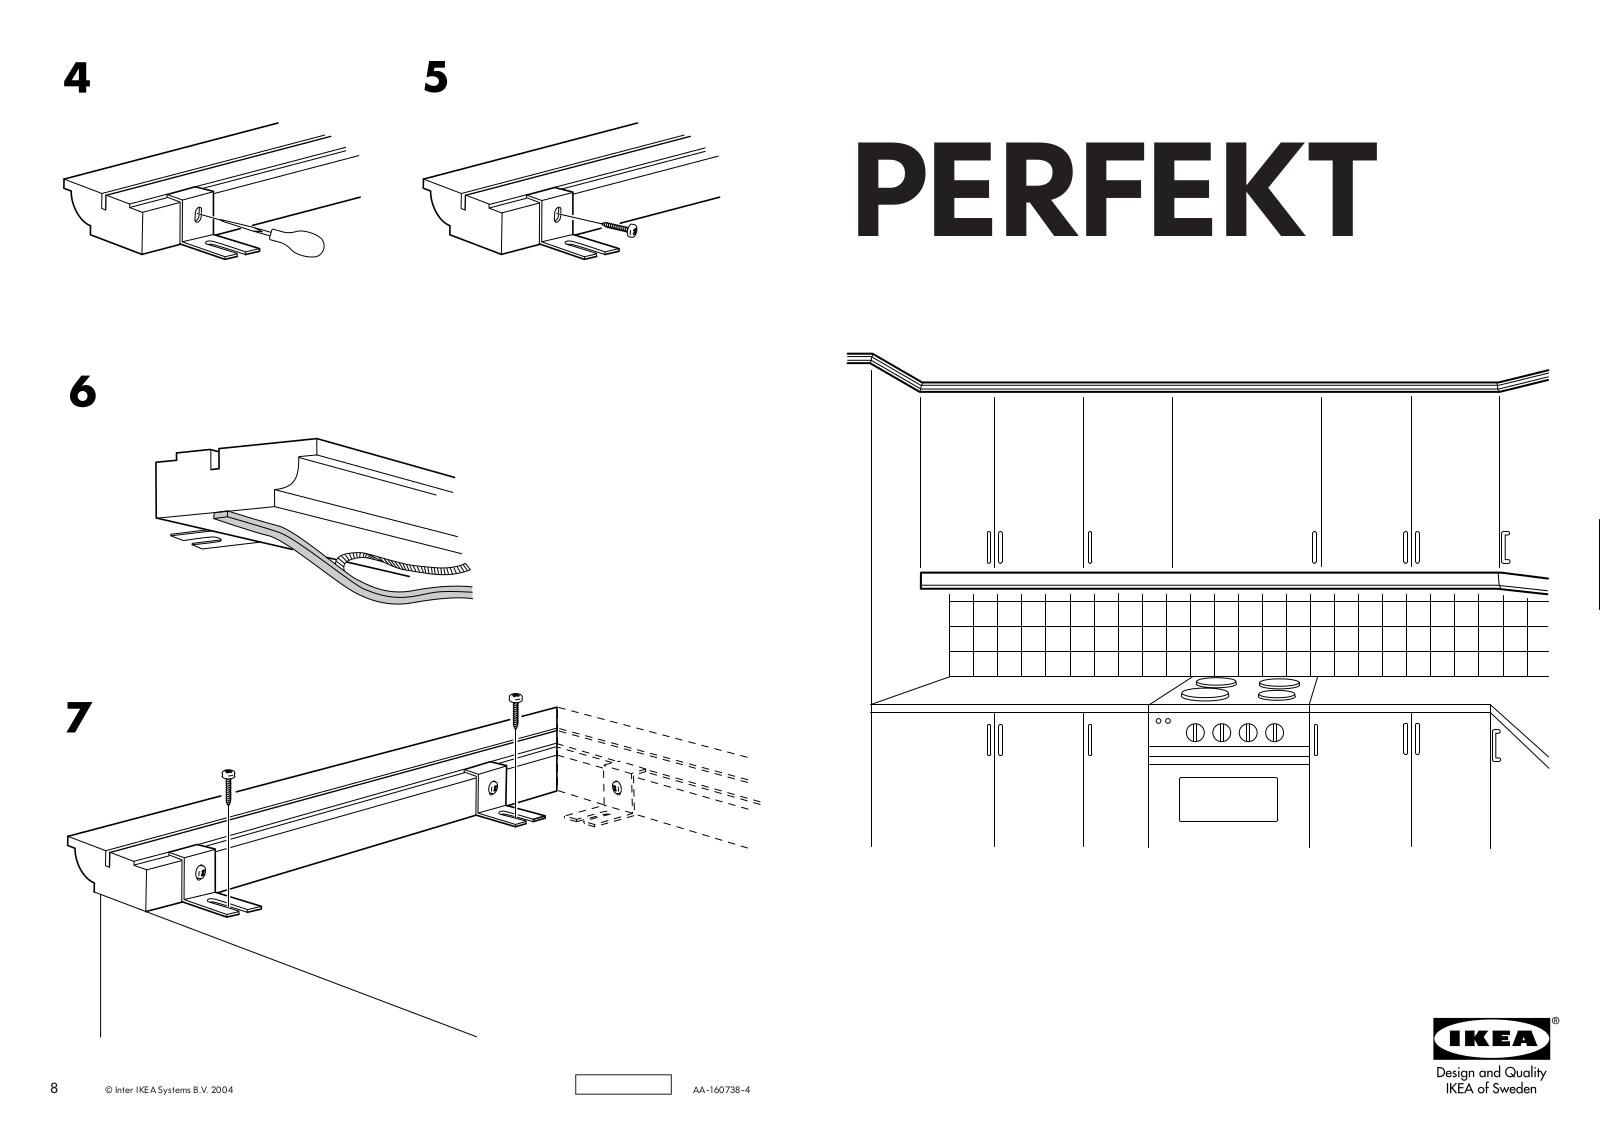 IKEA PERFEKT CONTOURED DECO STRIP 87, PERFEKT FAGERLAND CONTOURED DECO STRIP 87 Assembly Instruction